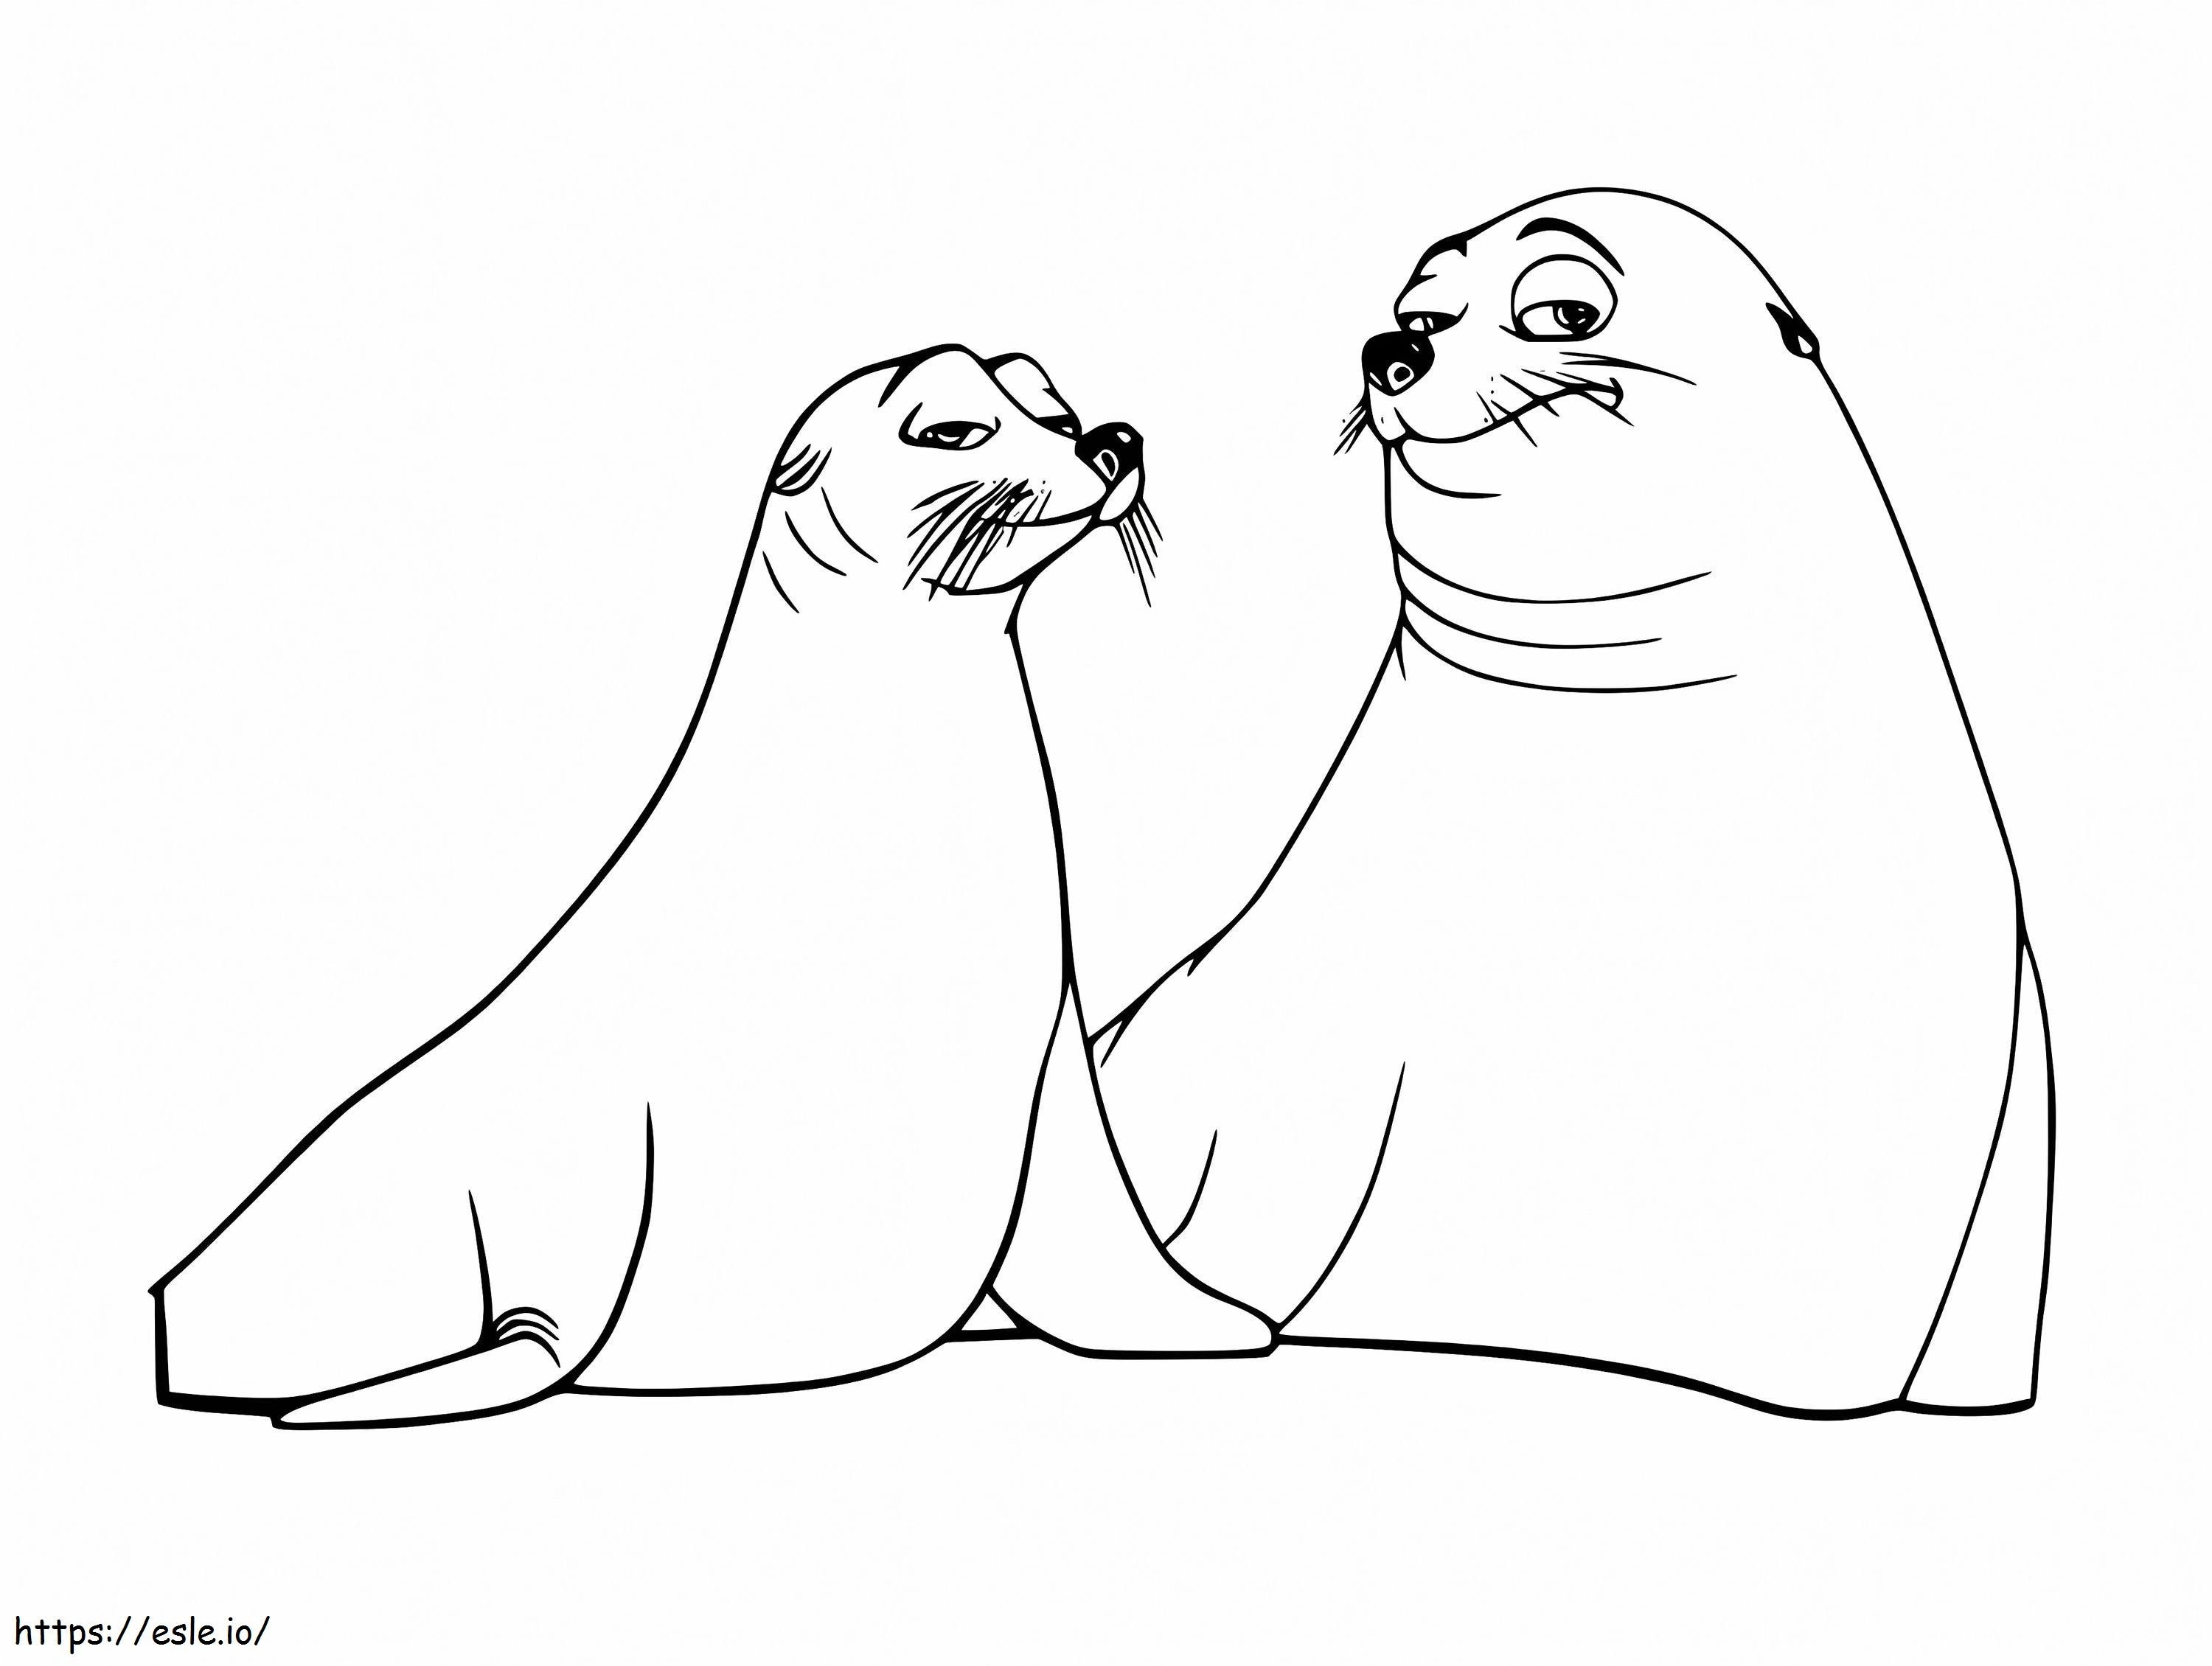 Cartoon Sea Lions coloring page